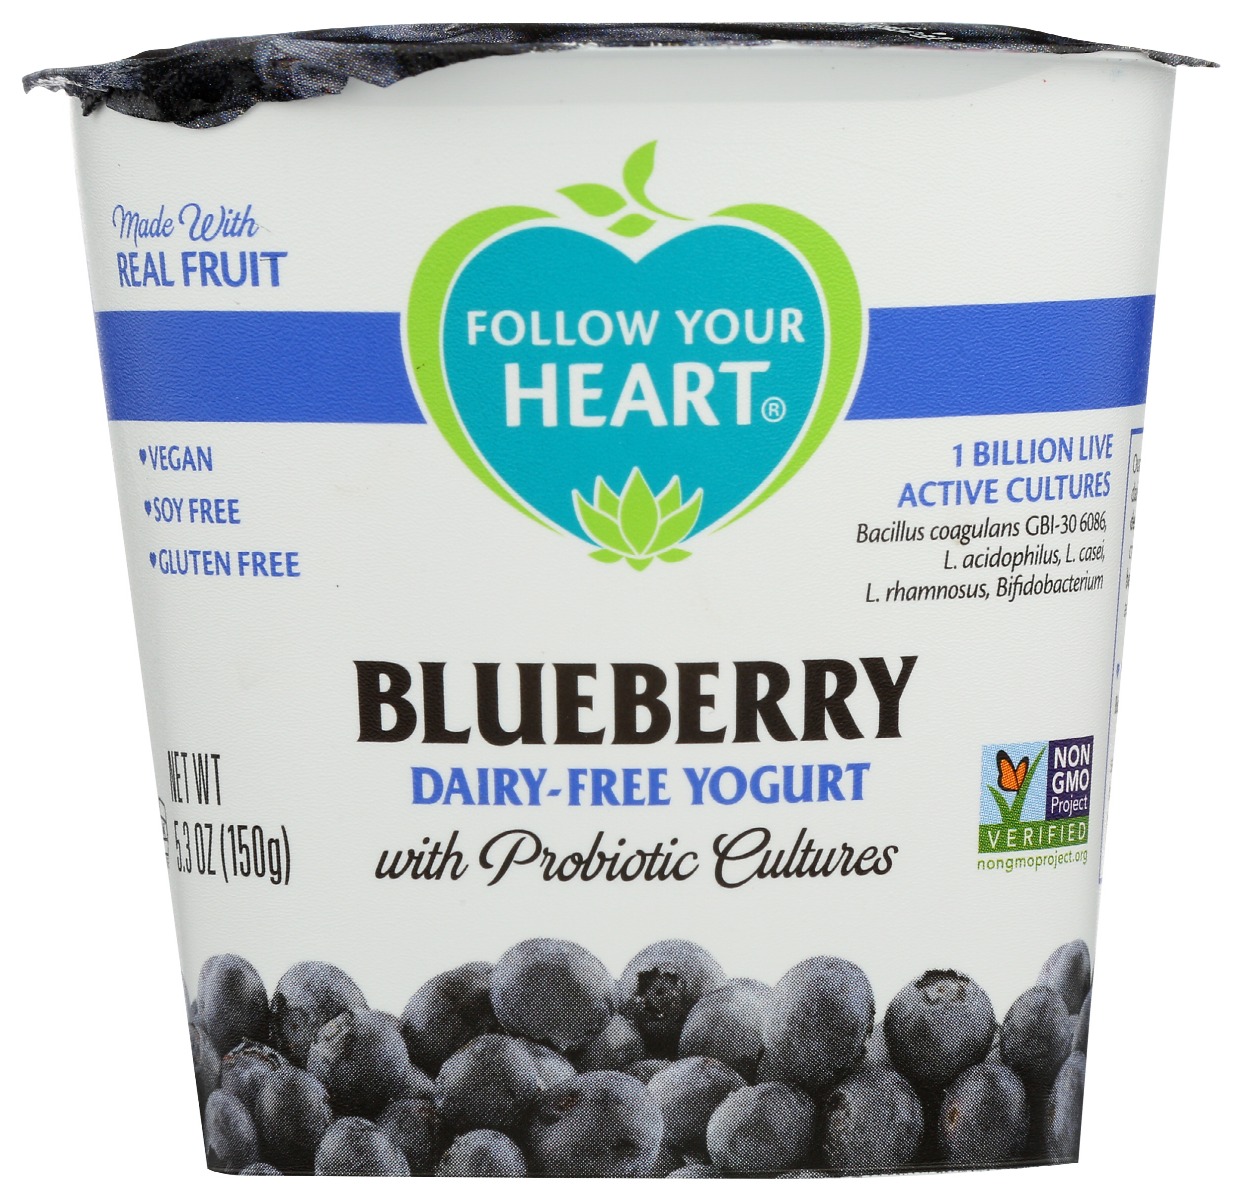 FOLLOW YOUR HEART: Blueberry Dairy-Free Yogurt, 5.3 oz - 0049568350103